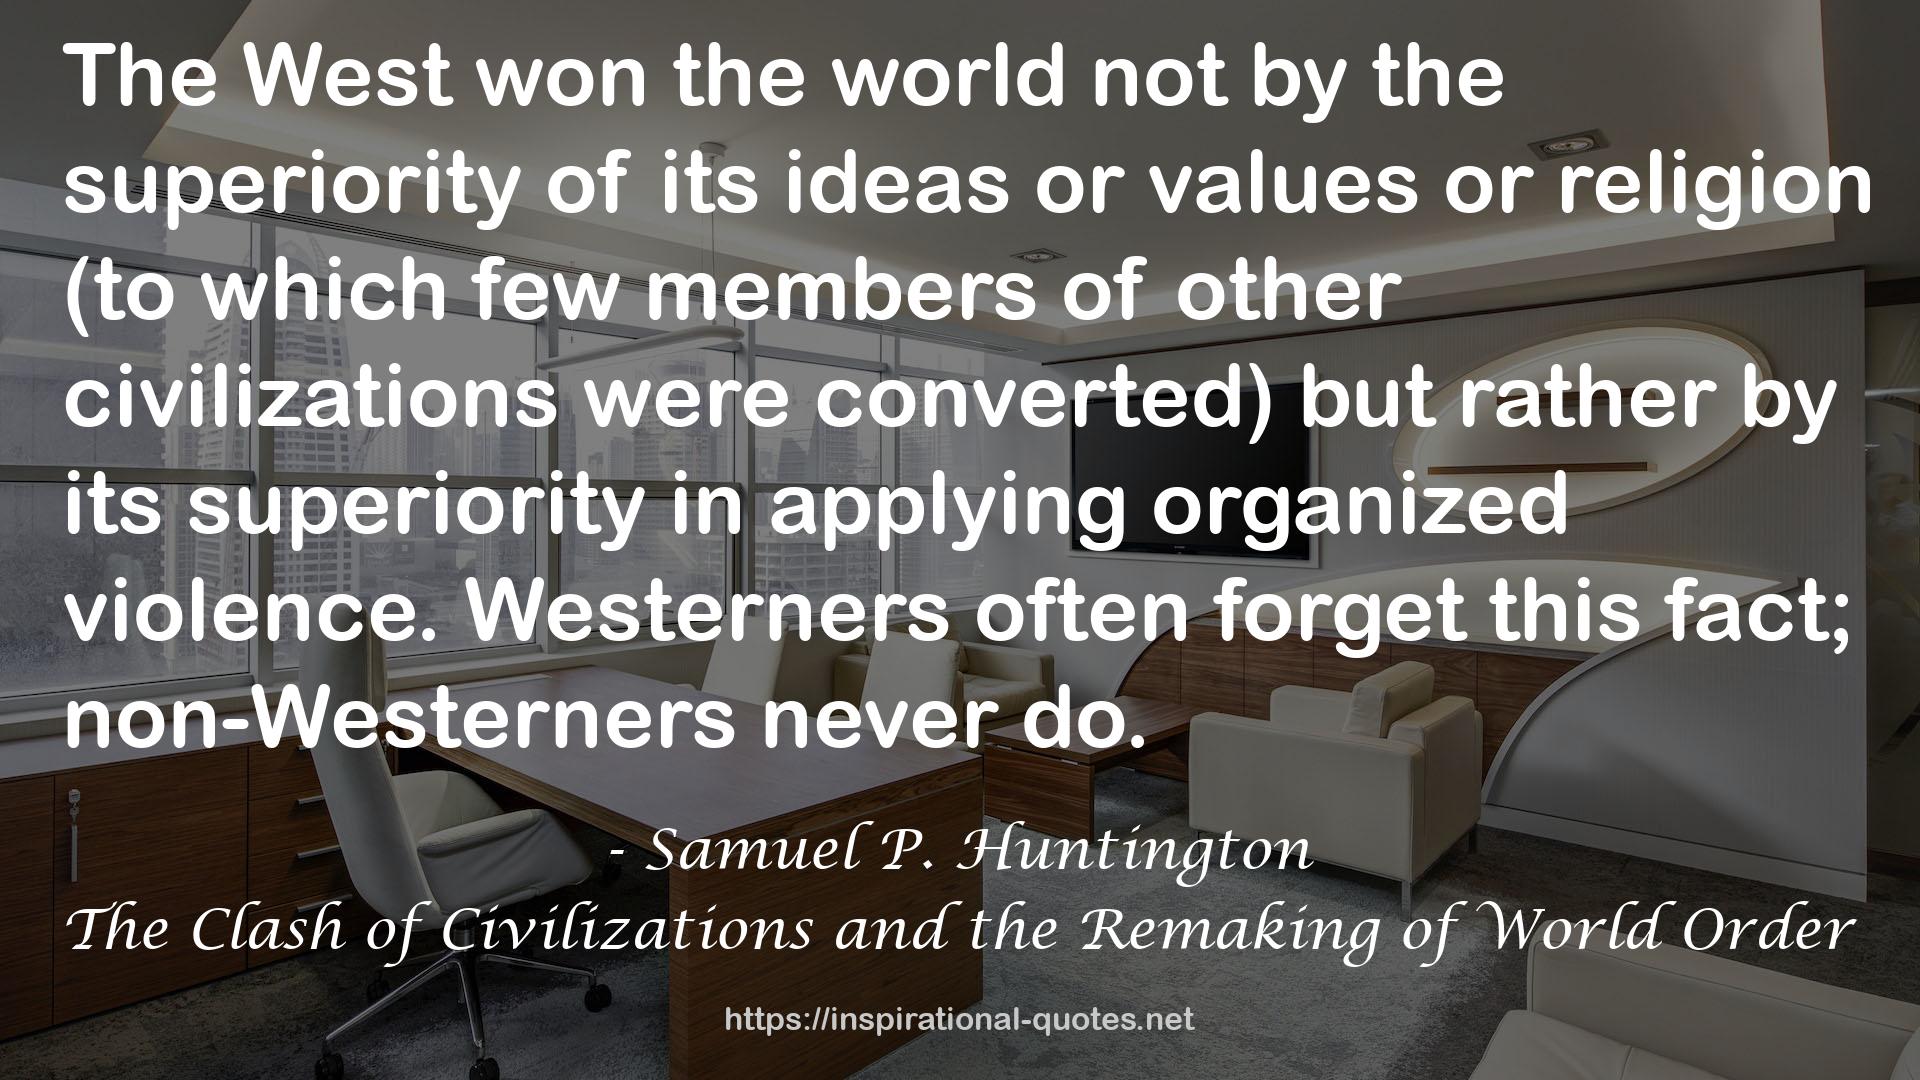 Samuel P. Huntington QUOTES